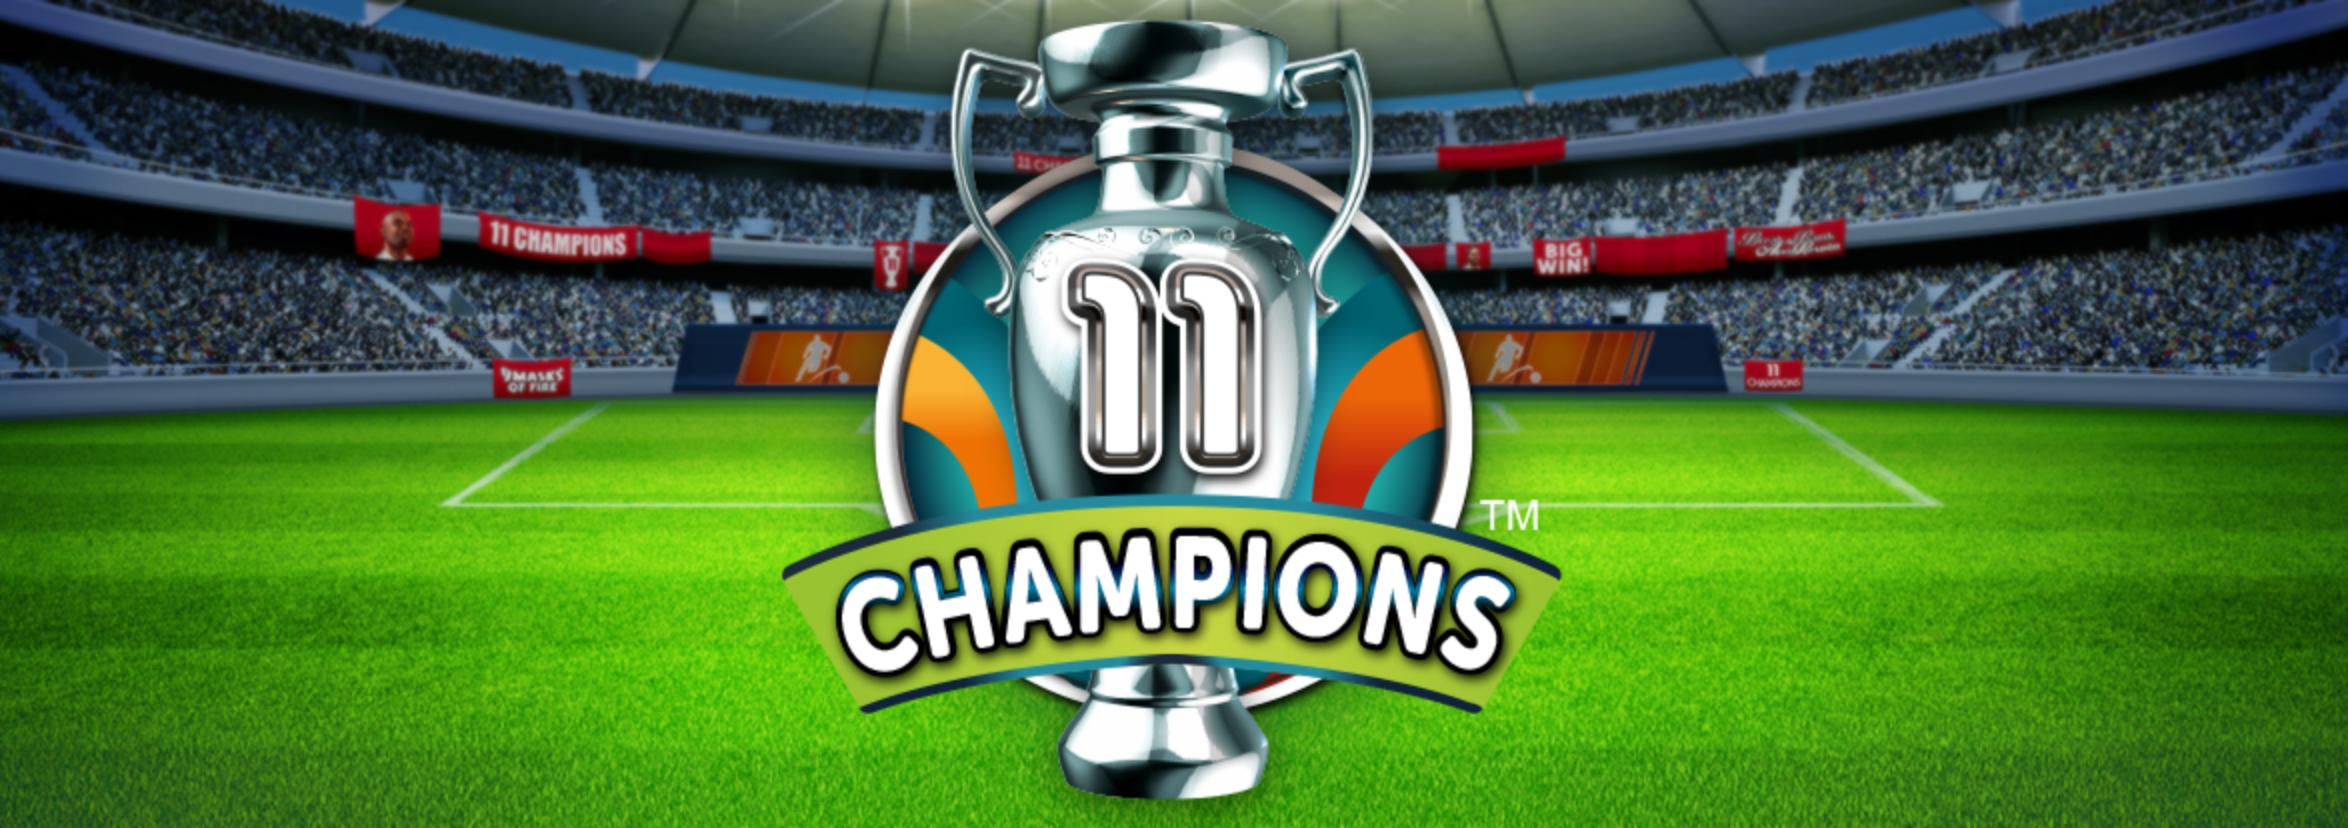 11 Champions demo